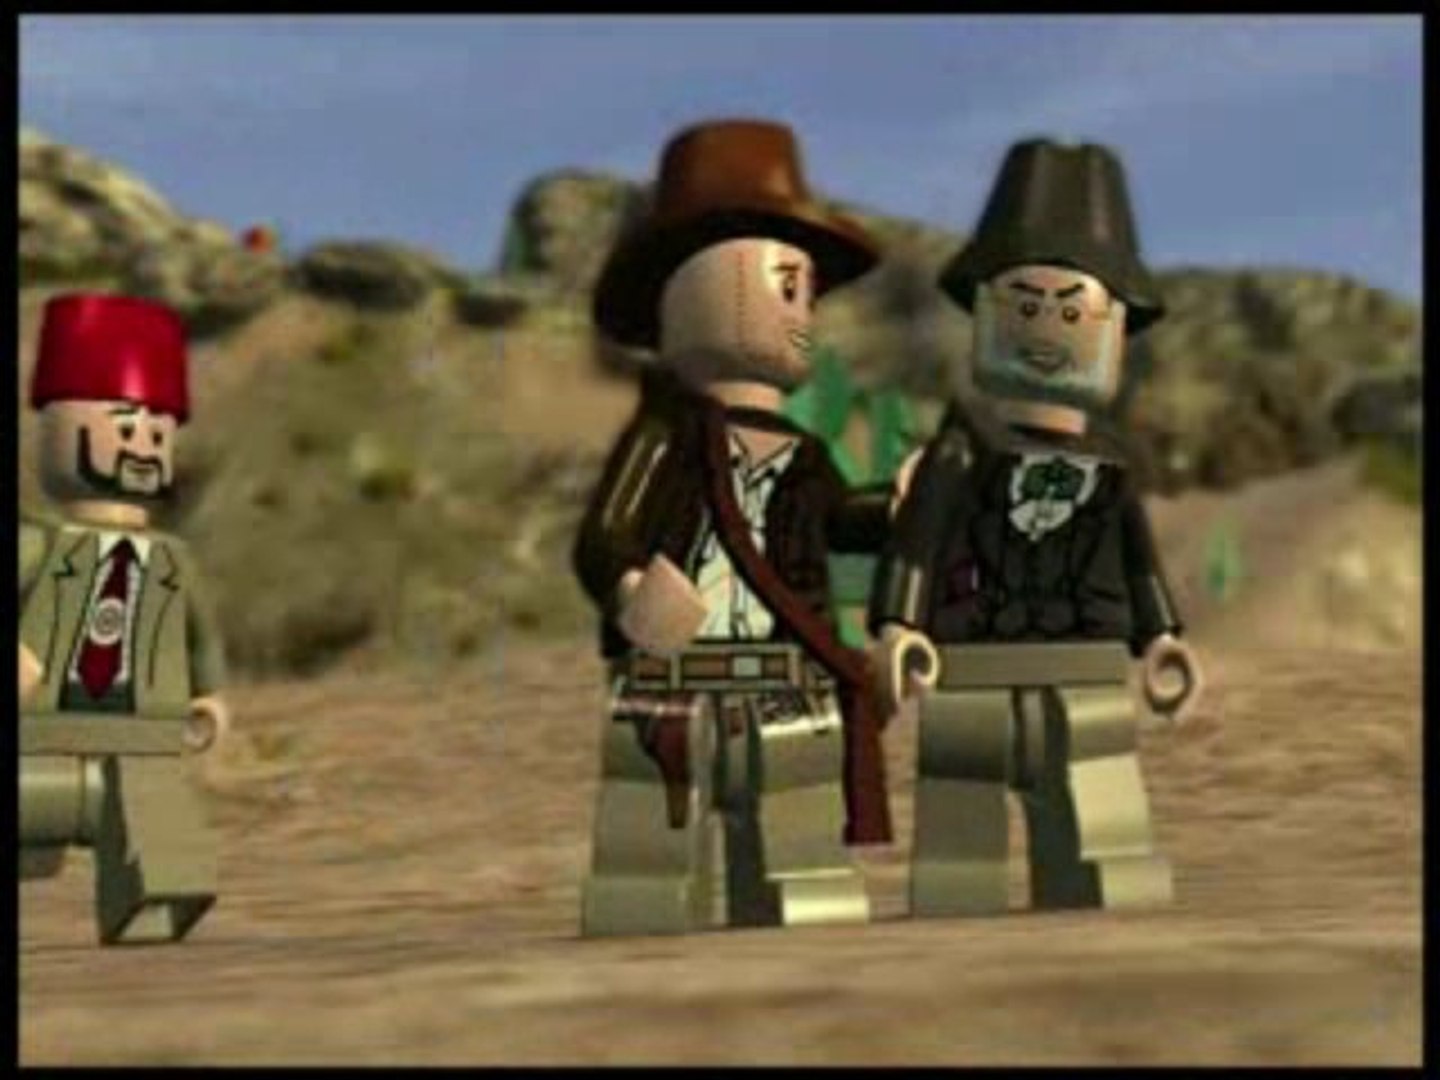 LEGO Indiana Jones 2 Cheats: Cheat Codes For XBOX 360 & How to